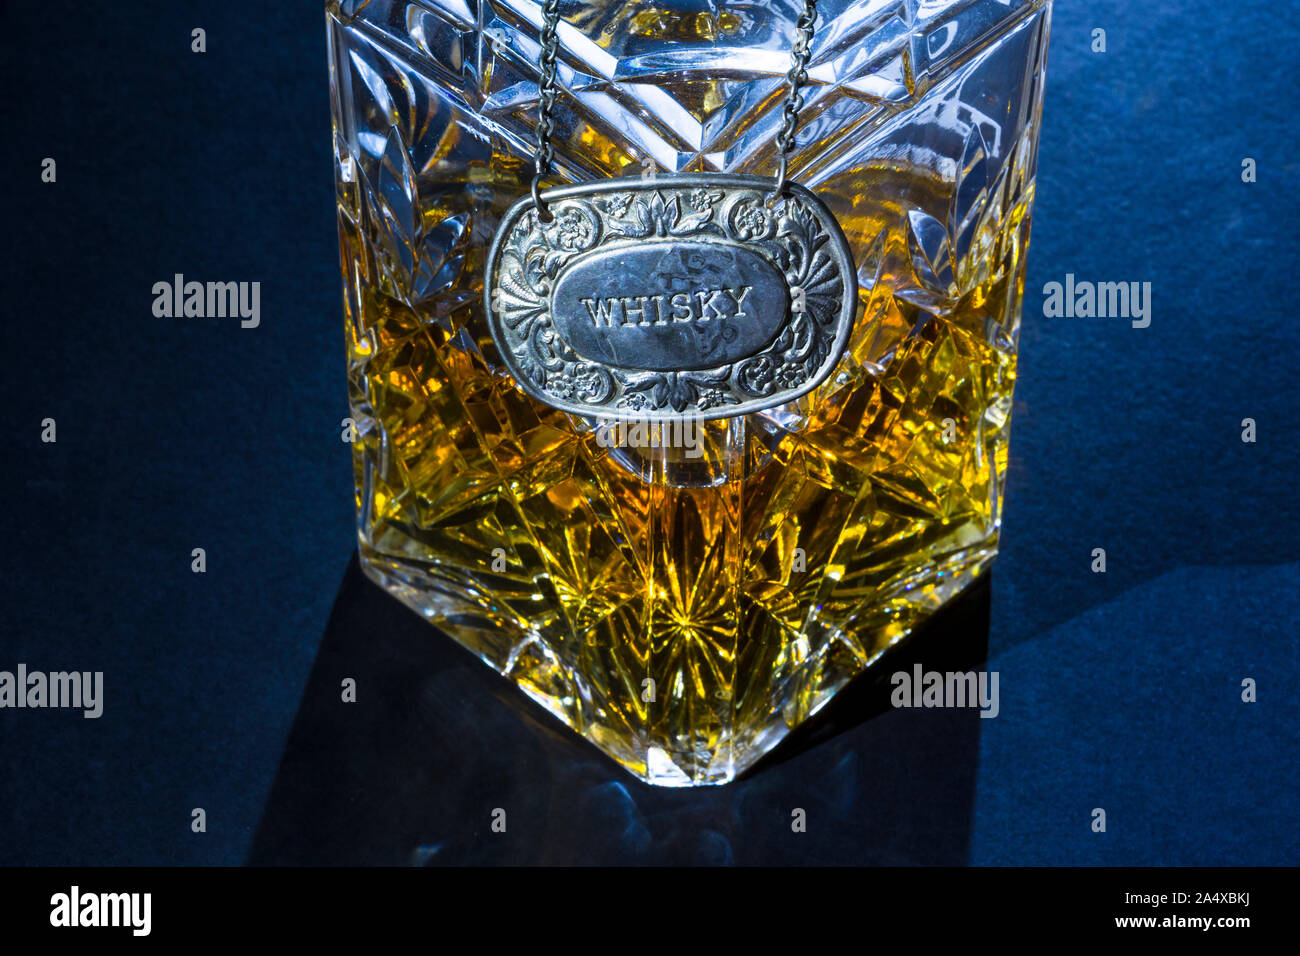 A decanter of single malt scotch whisky. Stock Photo